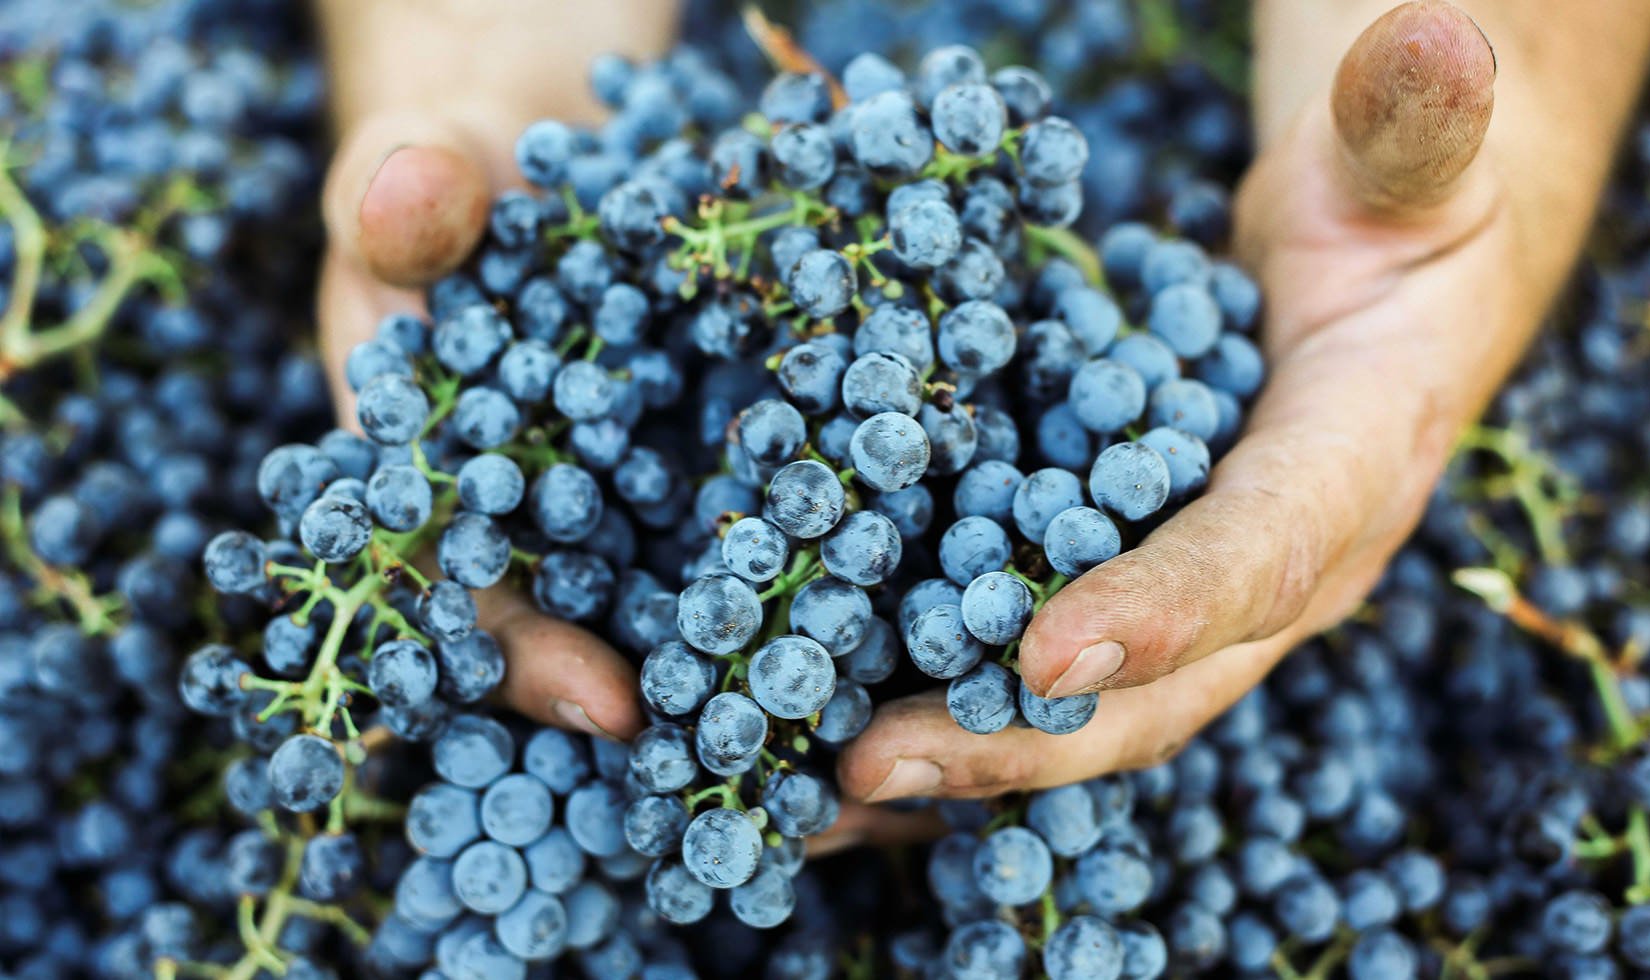 cabernet grape cluster in hands